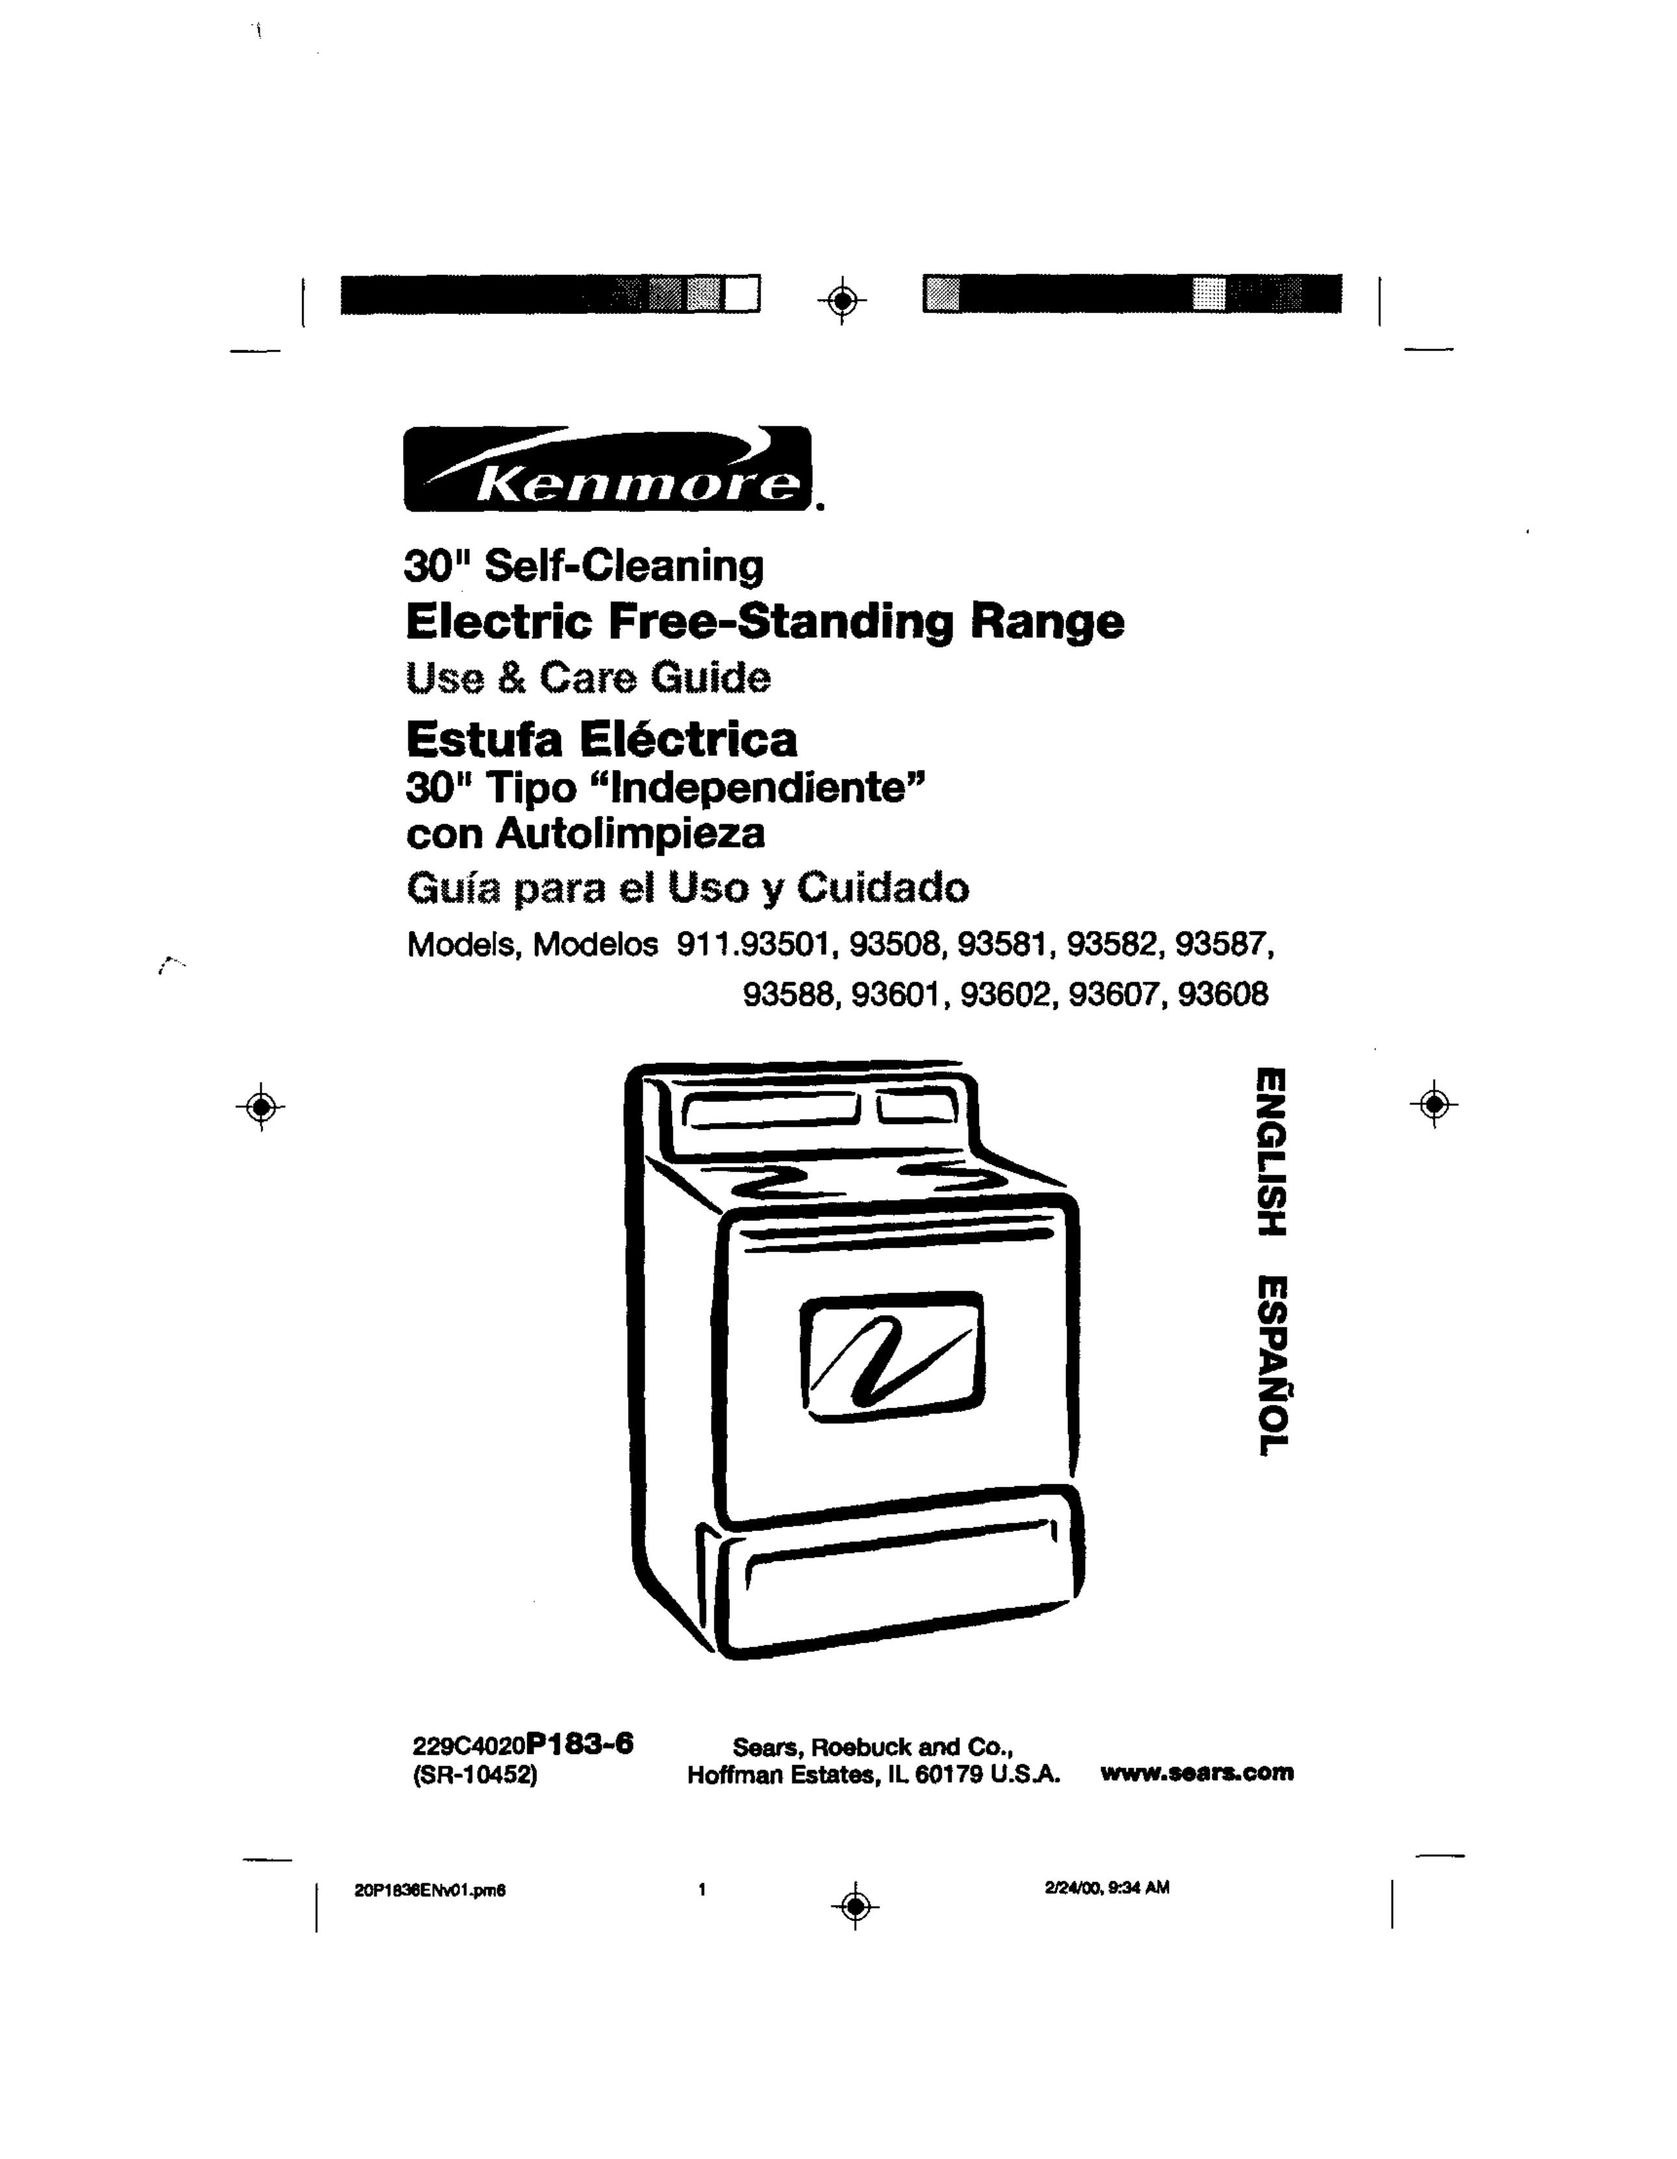 Kenmore 911.93581 Oven User Manual